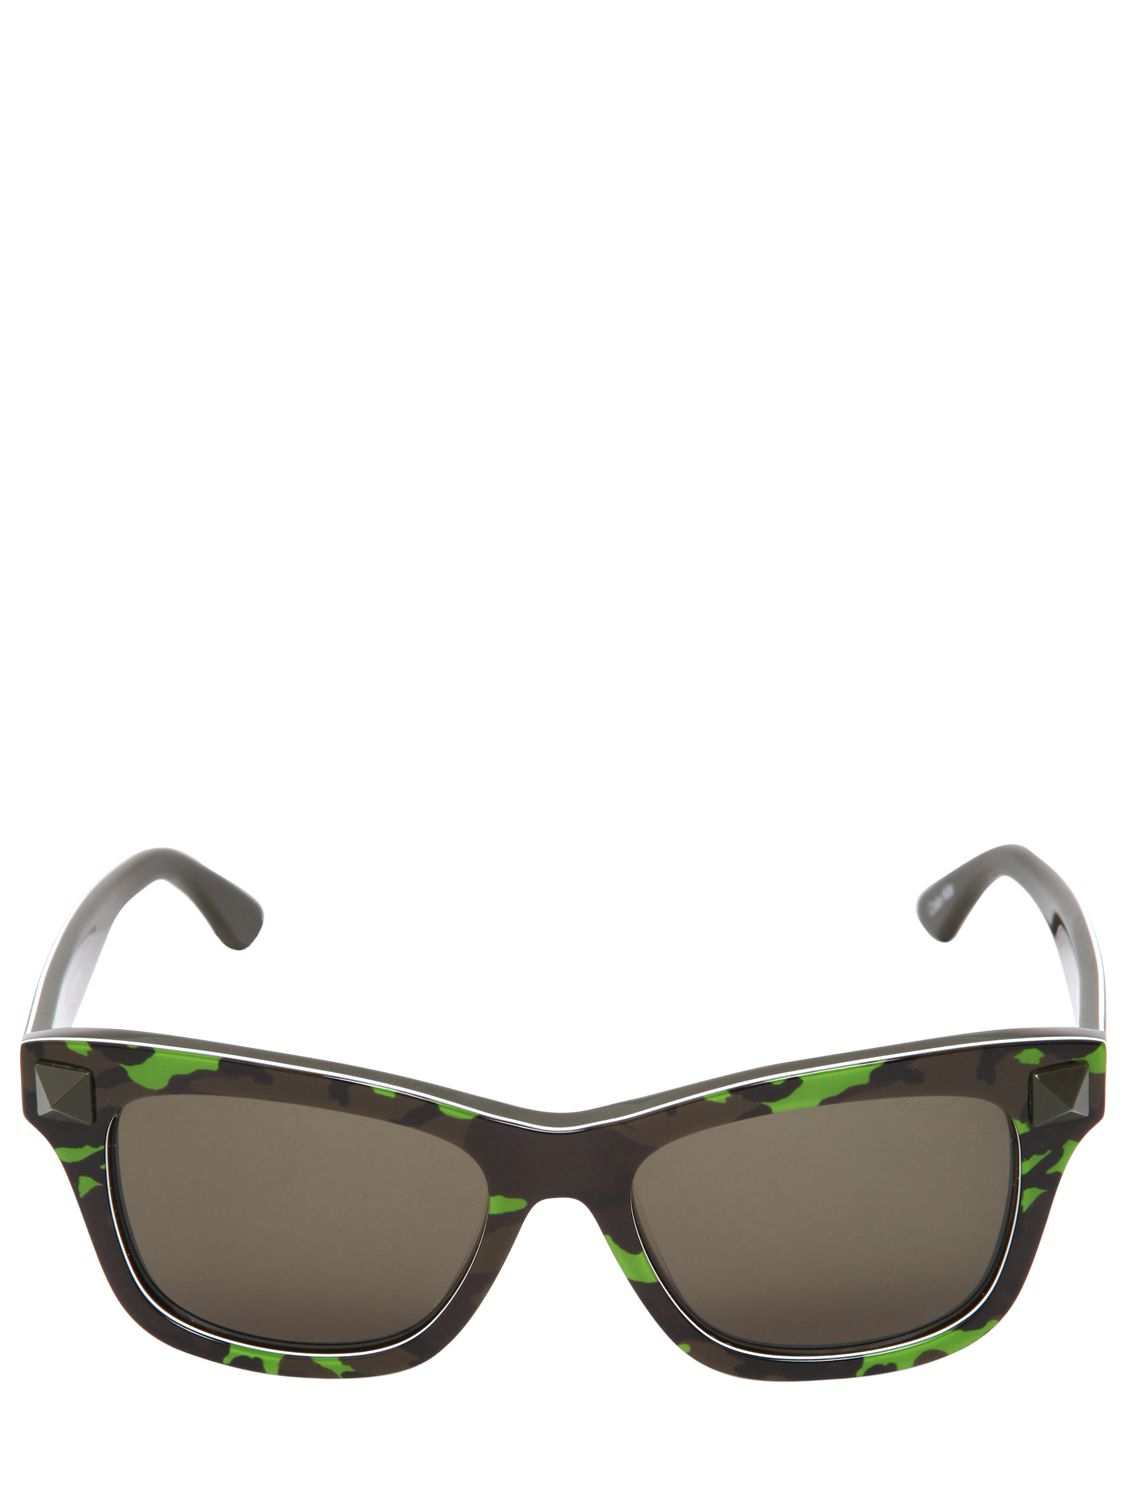 Valentino Neon Camouflage Squared Sunglasses in Green (Black) for Men - Lyst